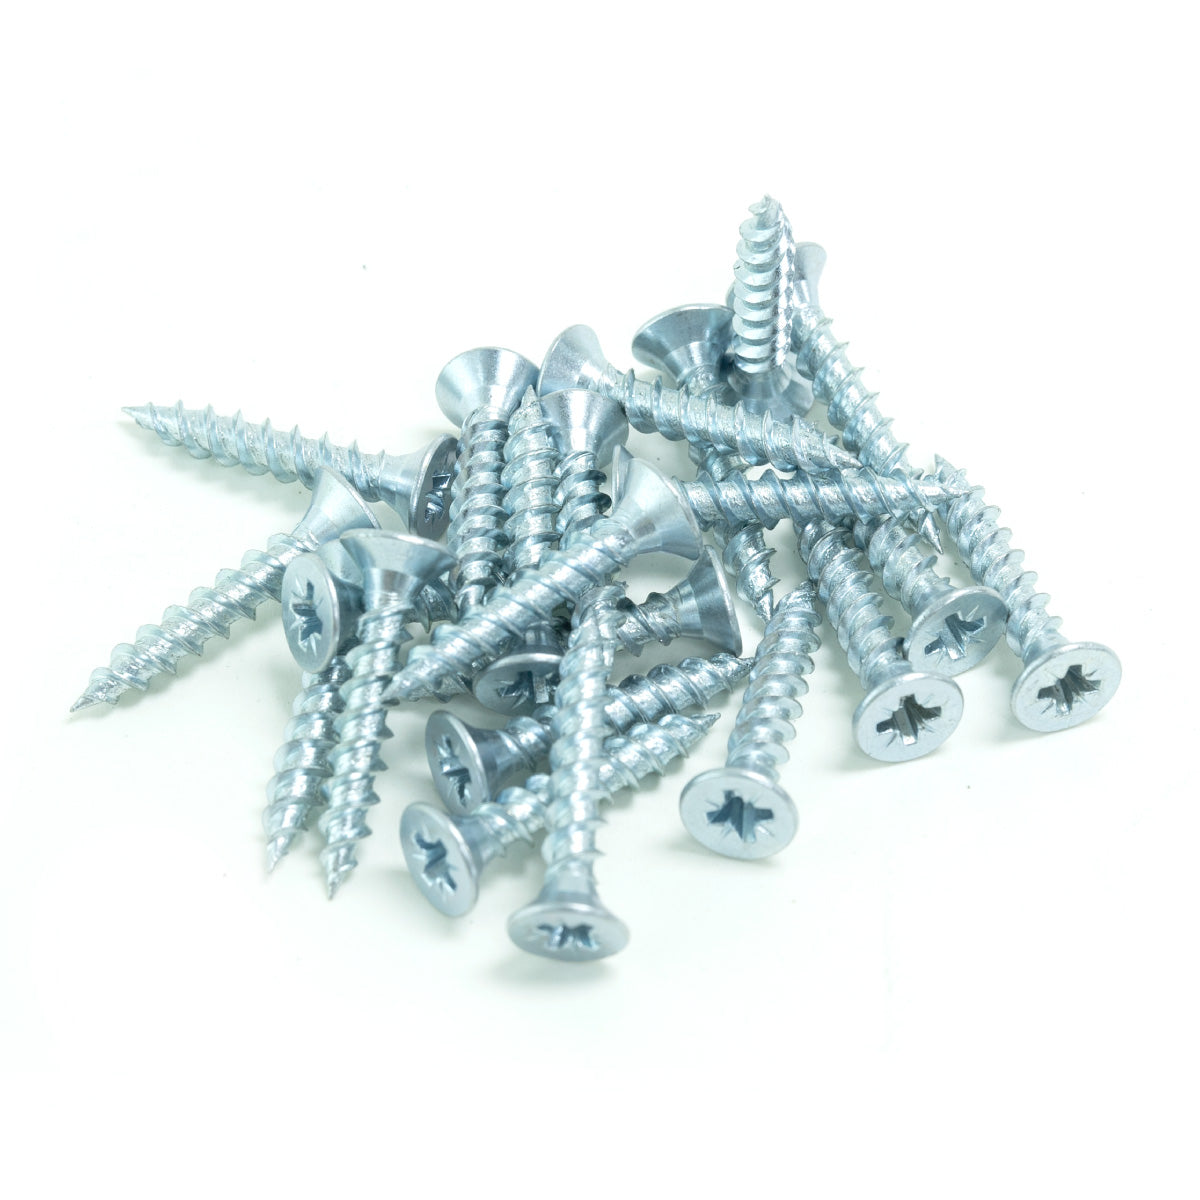 150pcs zinc plated countersunk twin thread screw 4x25mm (no brand name)